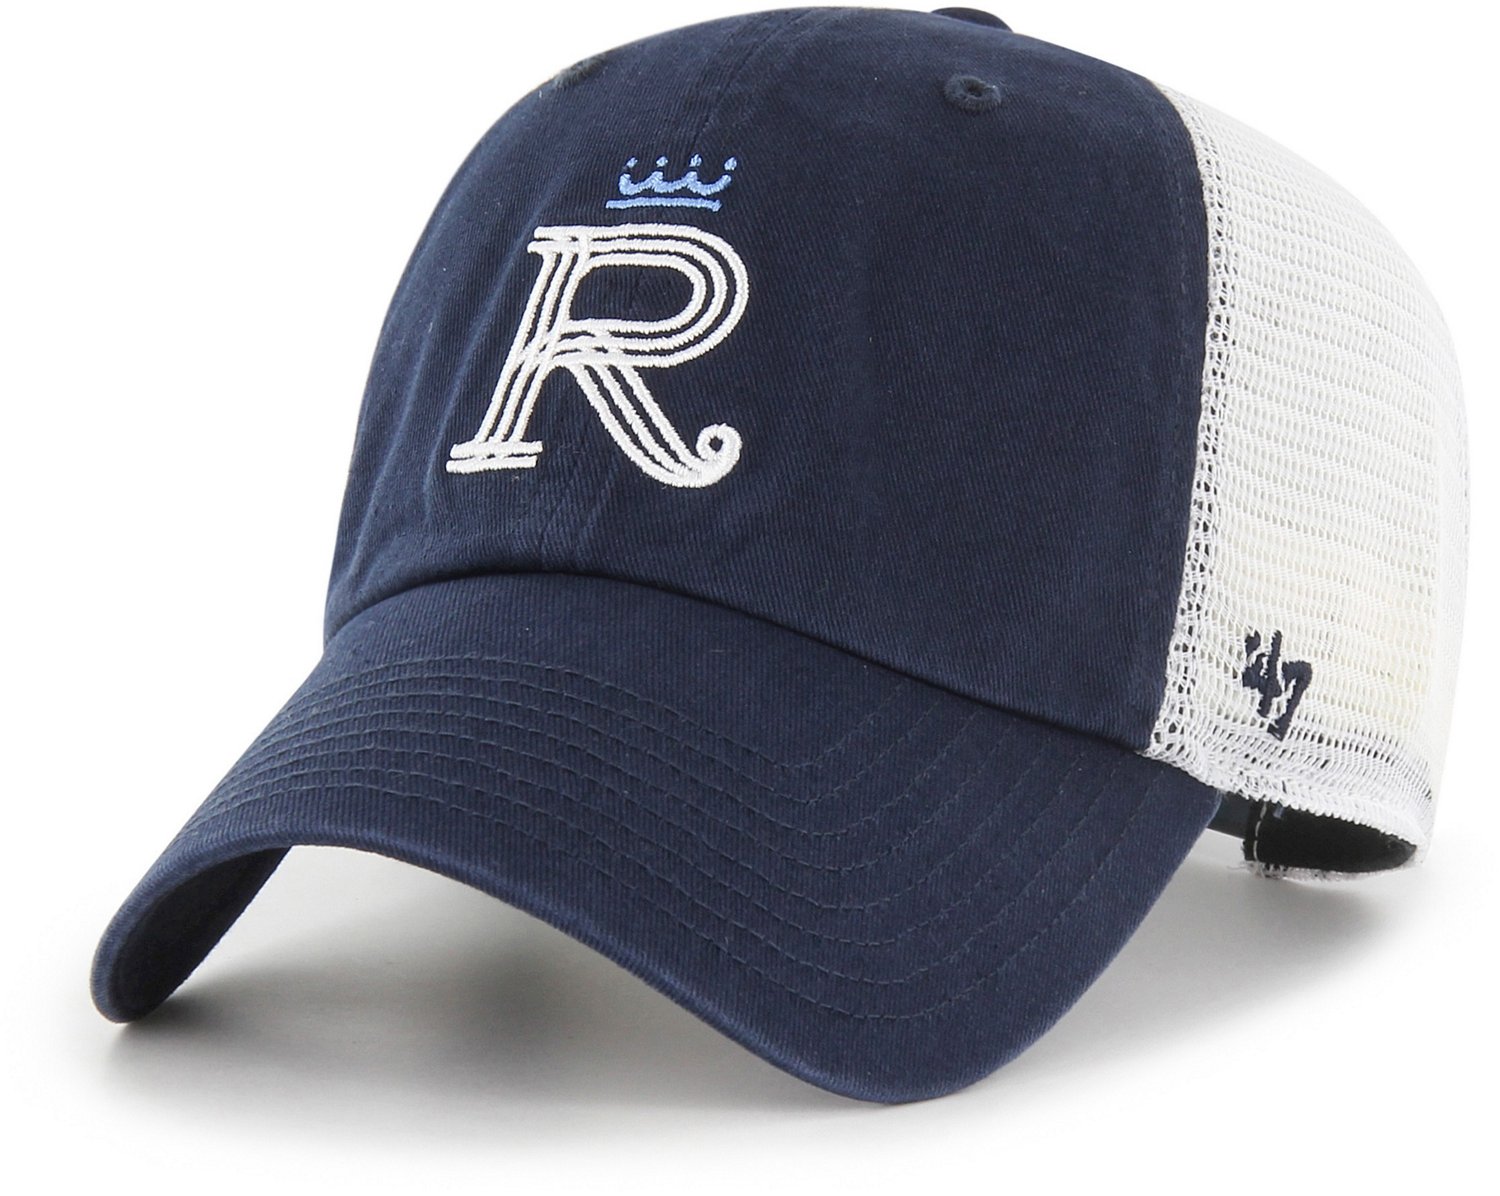 Kansas City Royals City Connect Hats, Royals City Connect